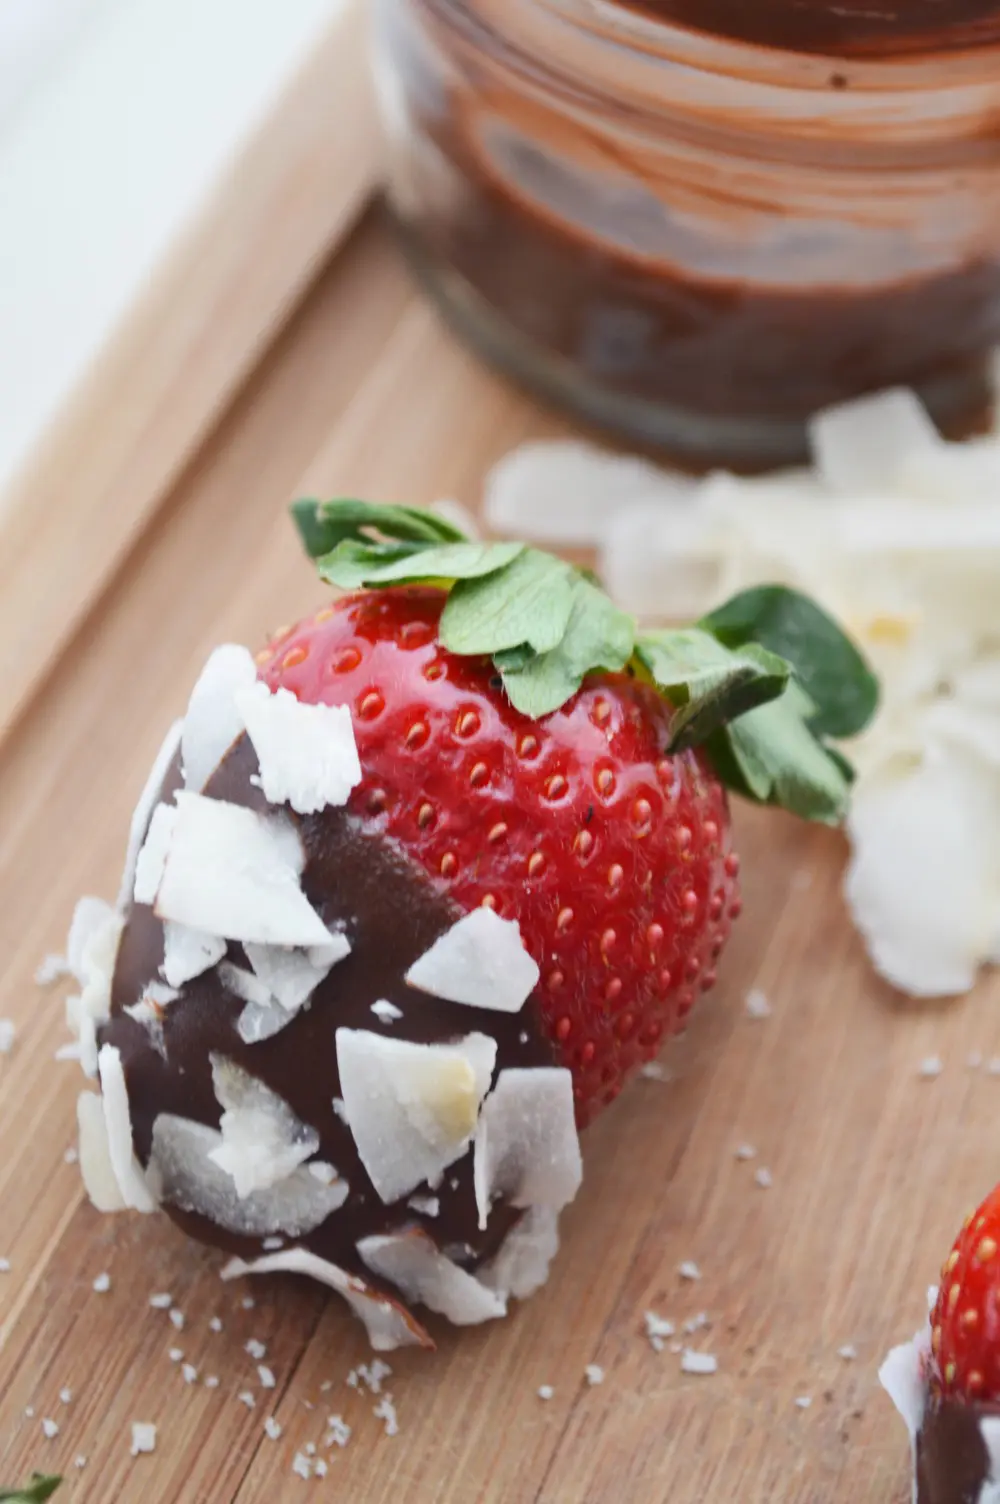 Dark Chocolate Covered Strawberries with Raw Flake Coconut